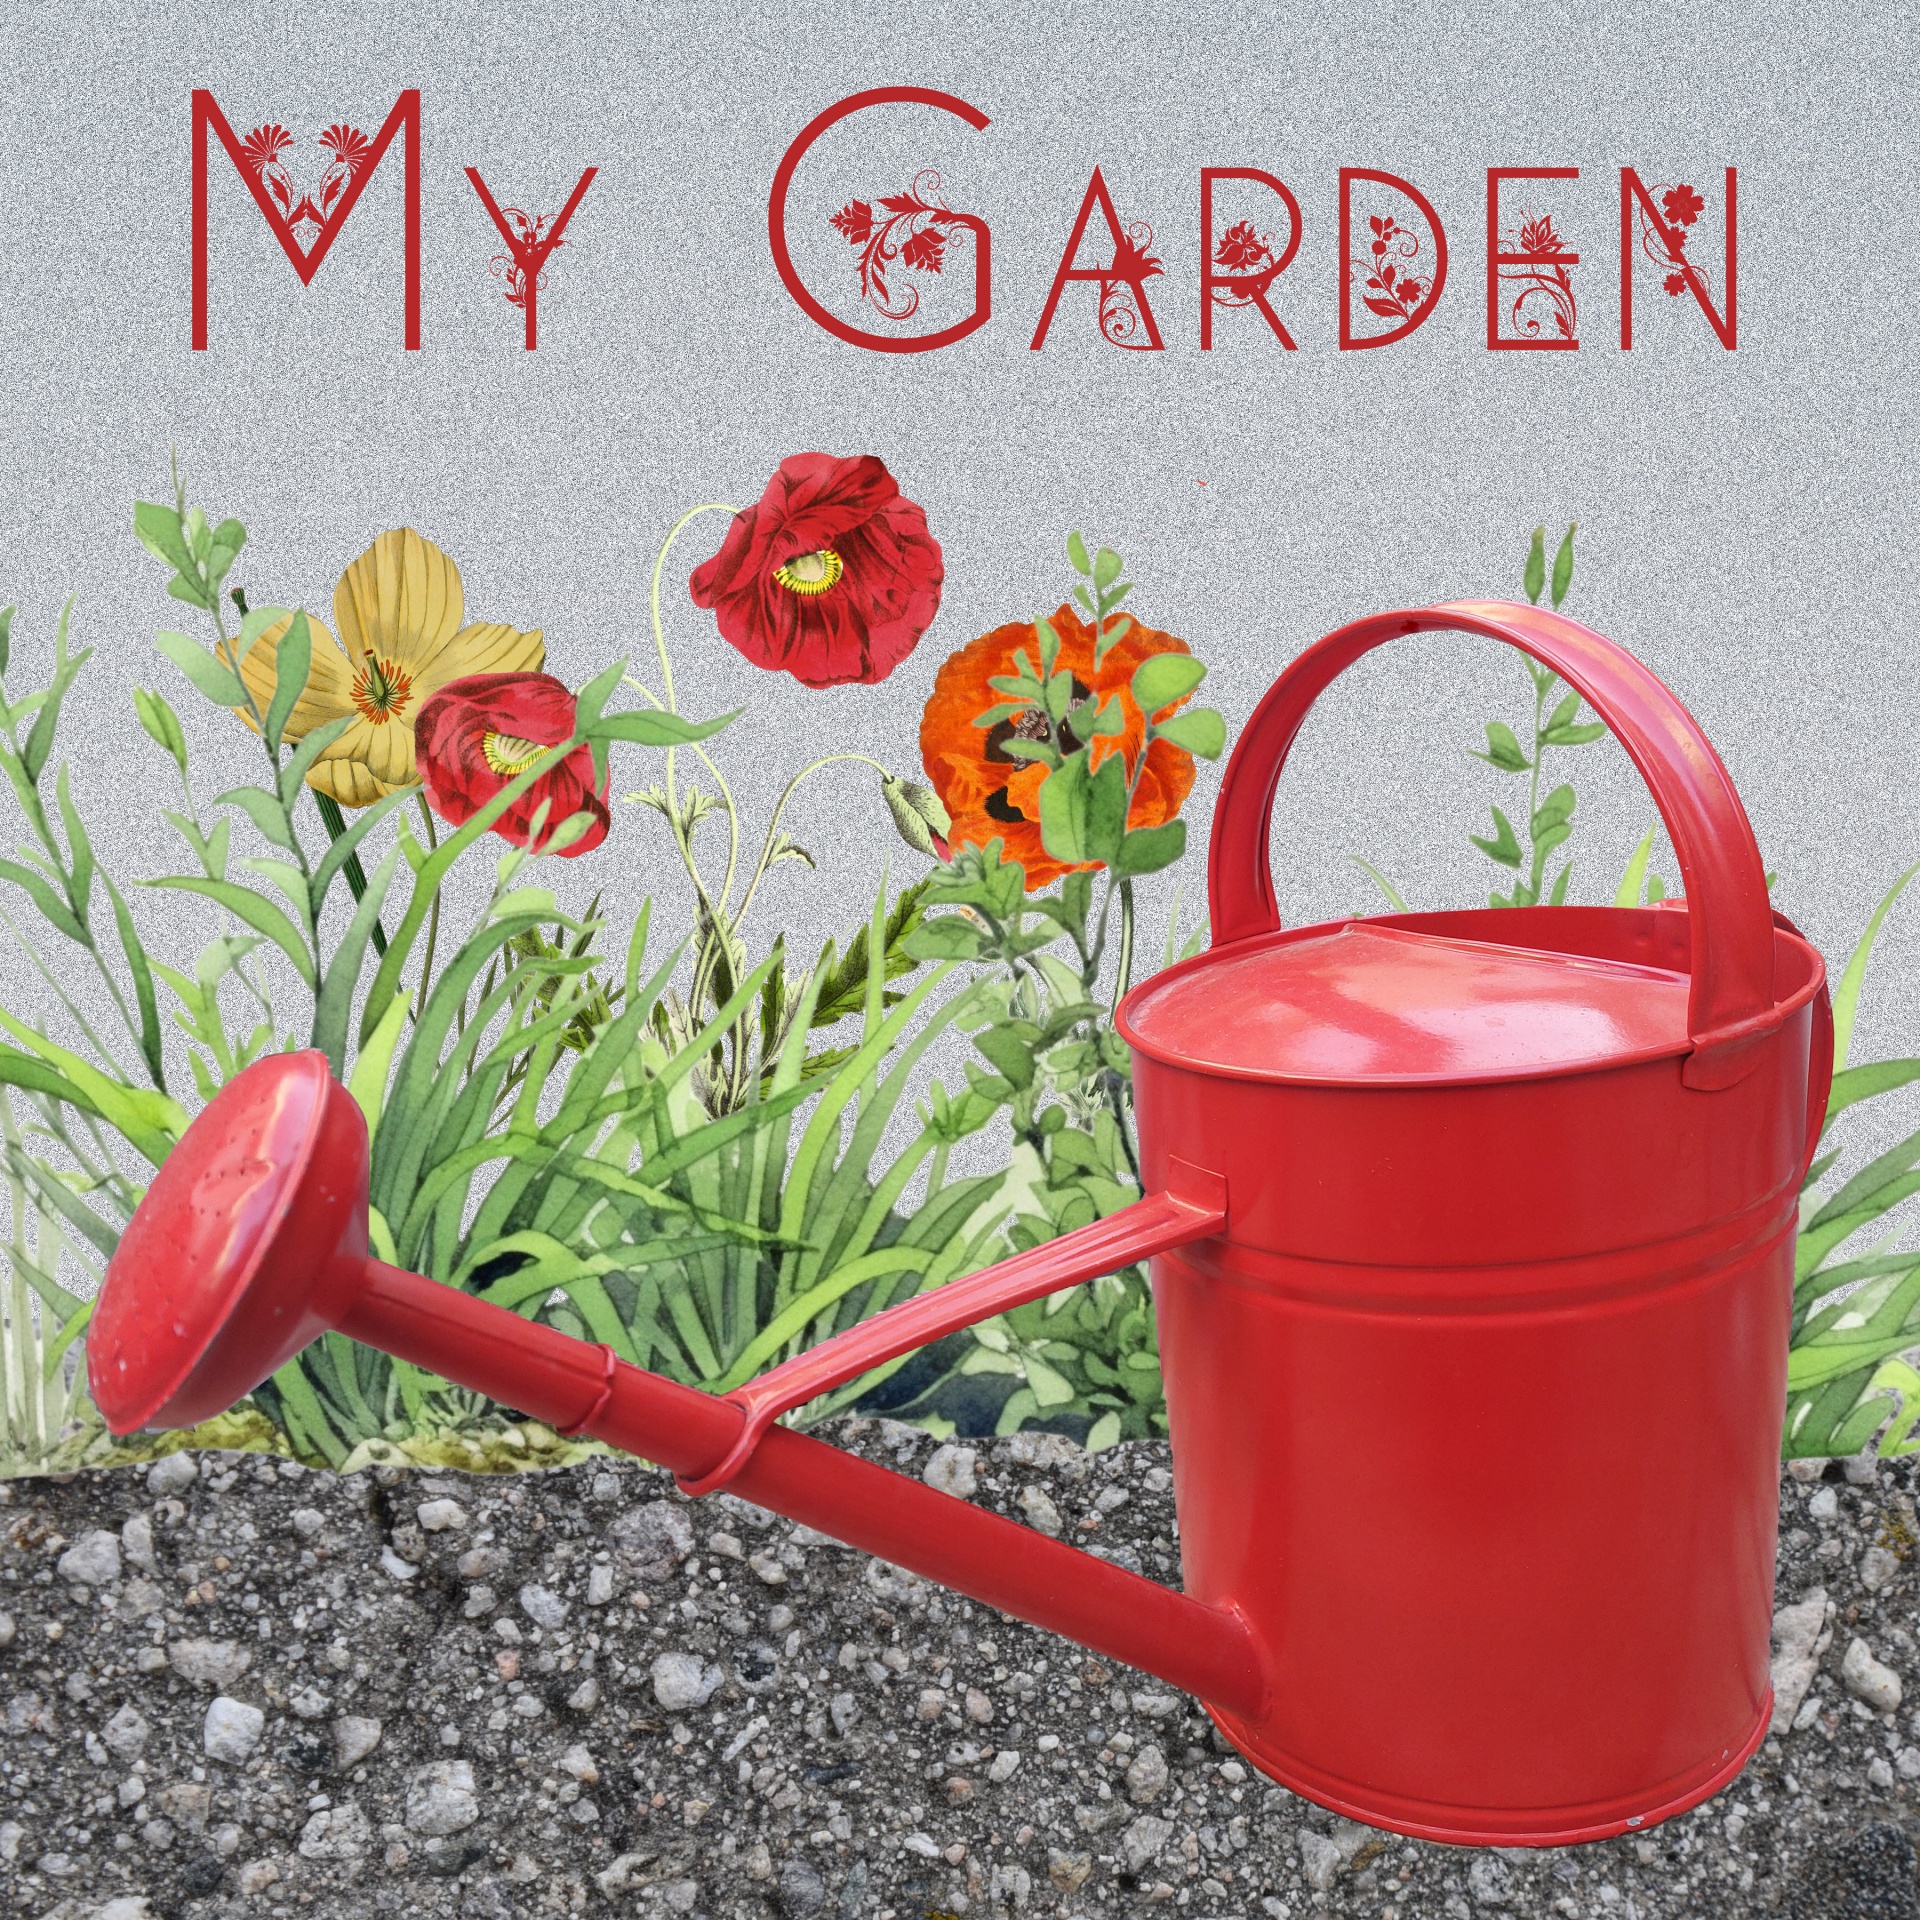 My Garden Illustration Free Stock Photo - Public Domain Pictures